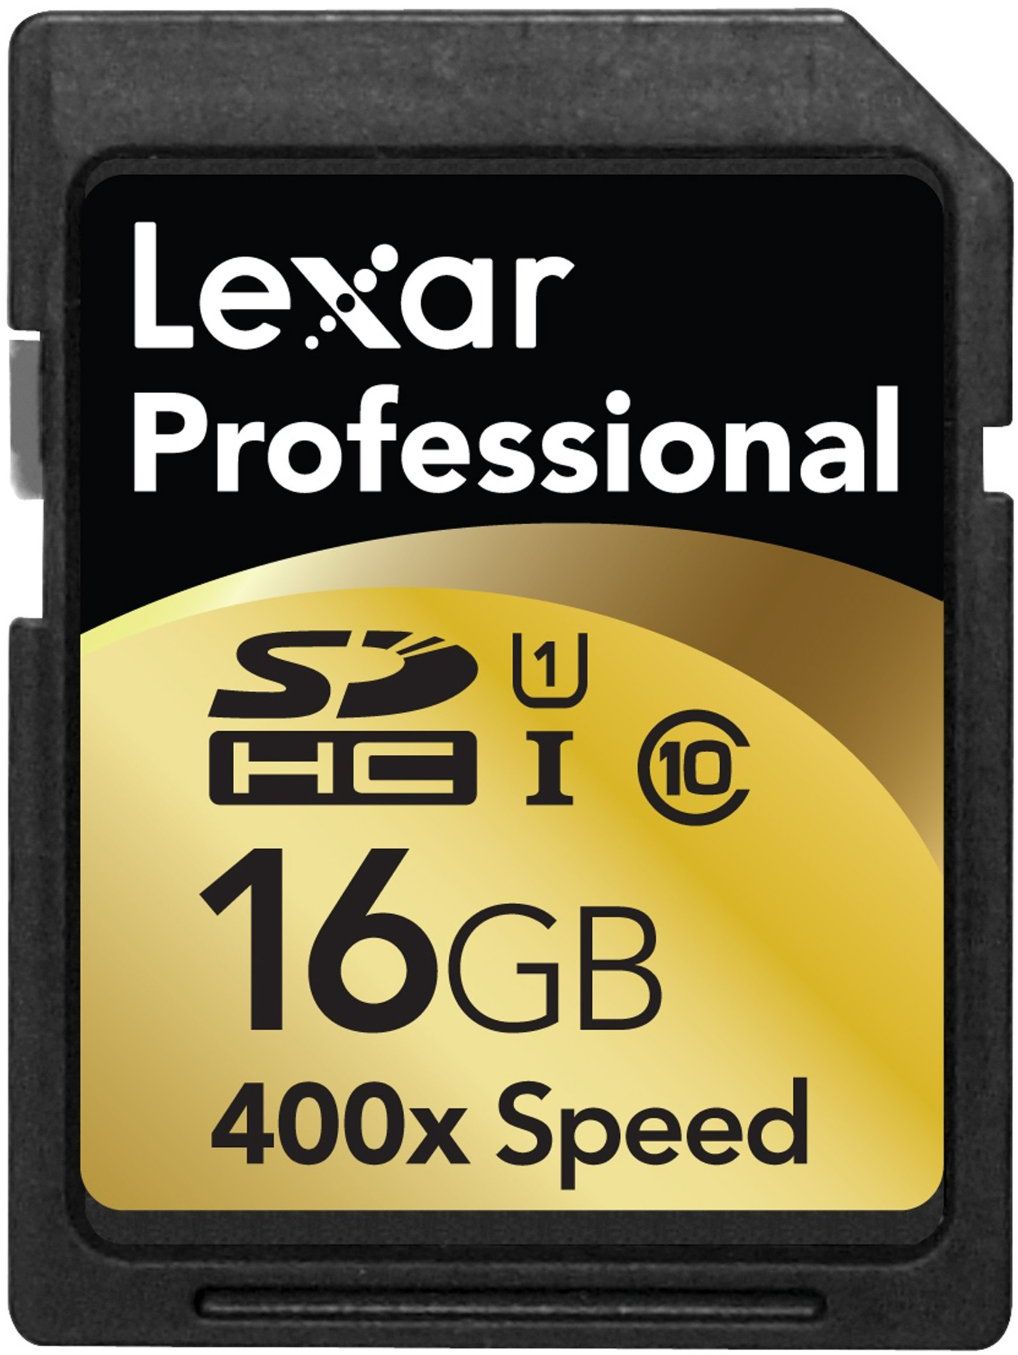 Professional 400x SDHC UHS-I CLASS 10 - 16GB